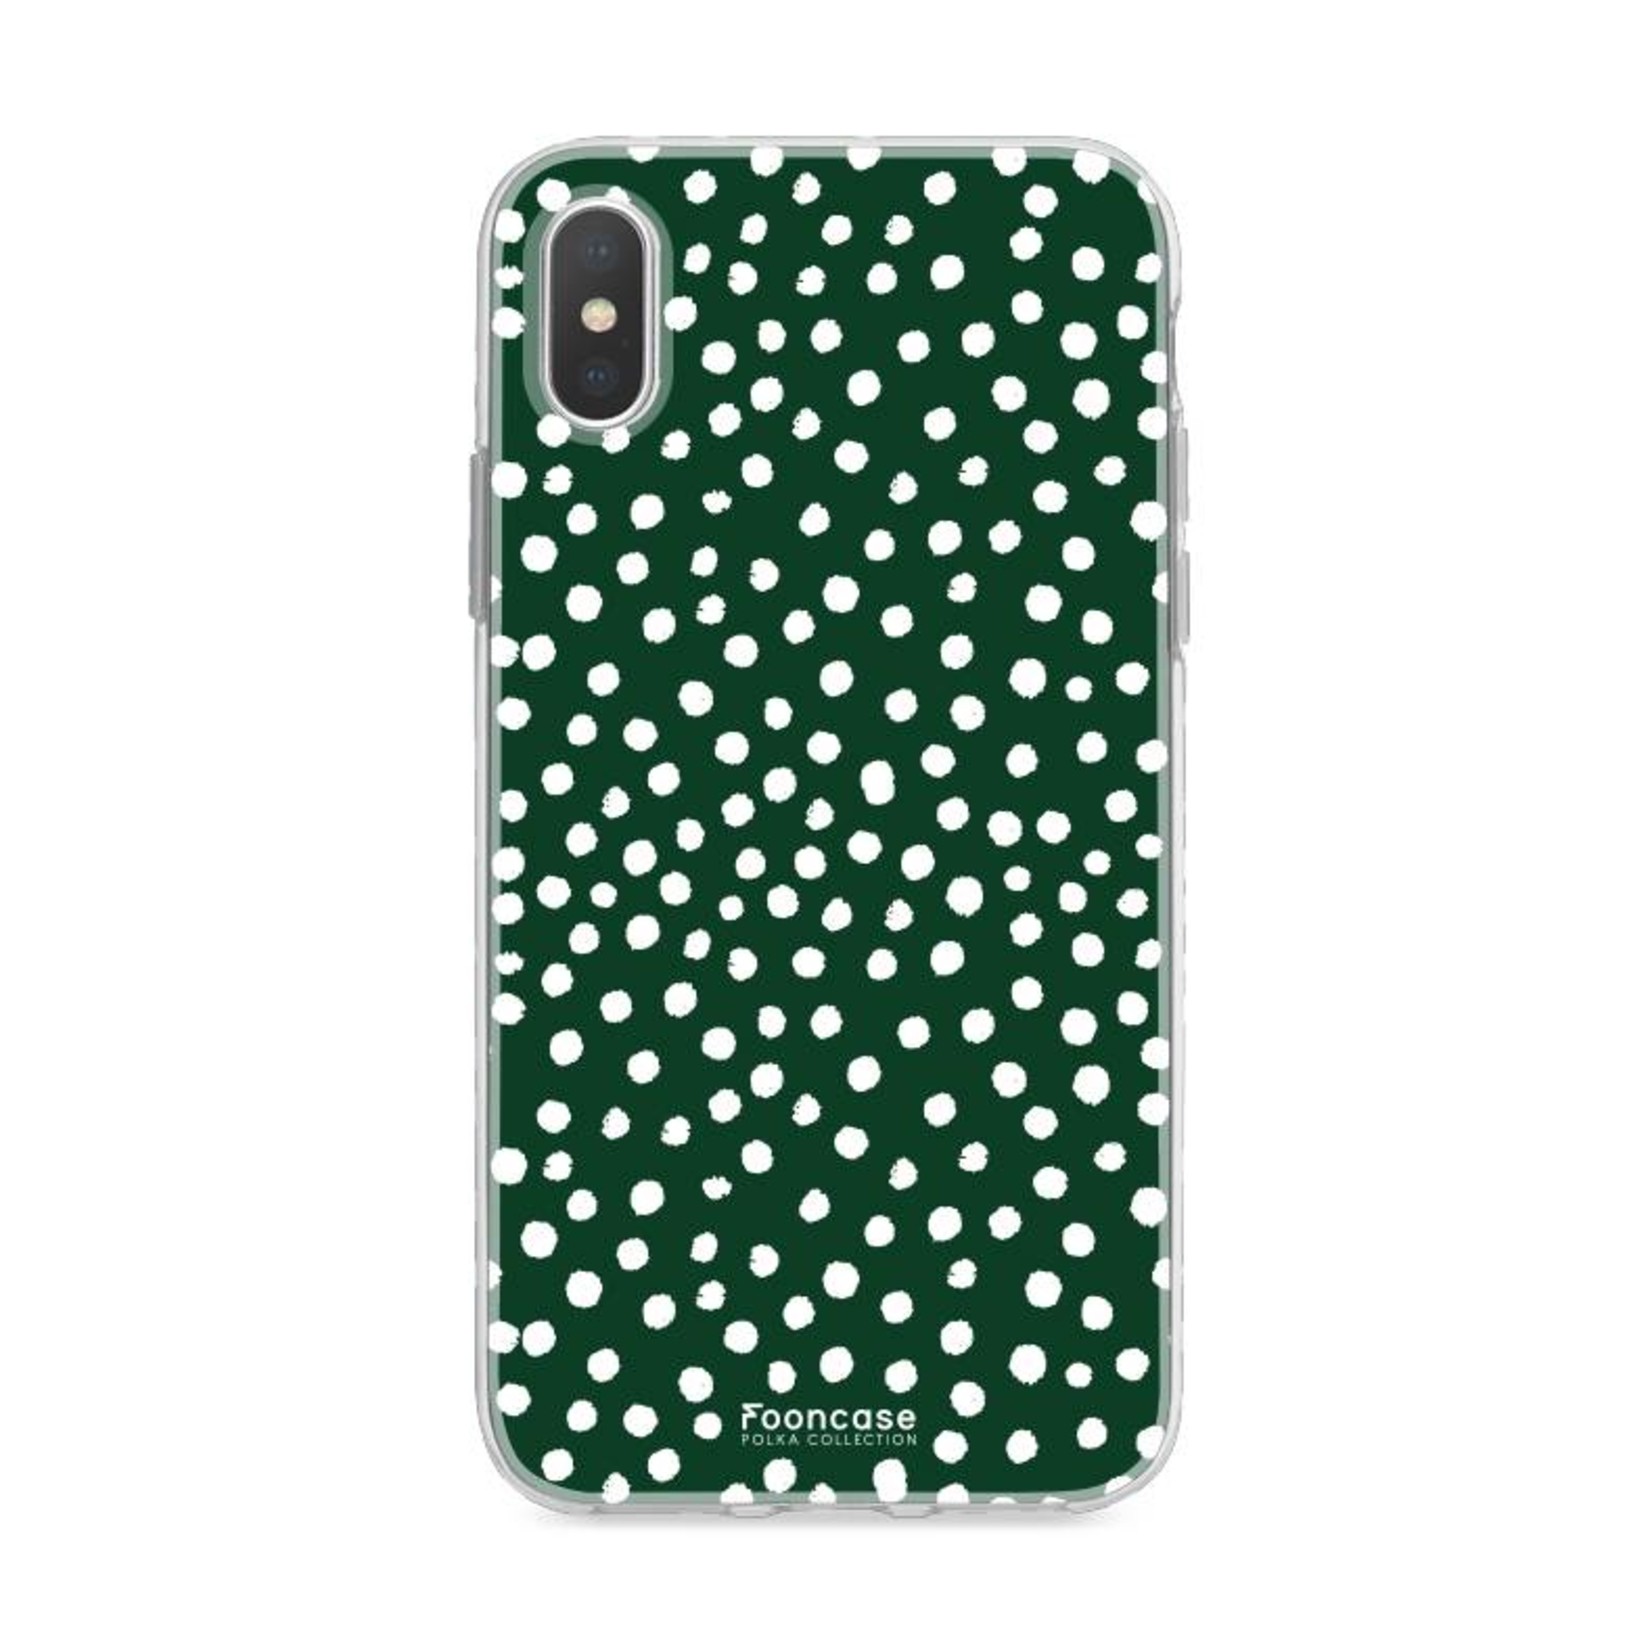 FOONCASE Iphone XS - POLKA COLLECTION / Dark green